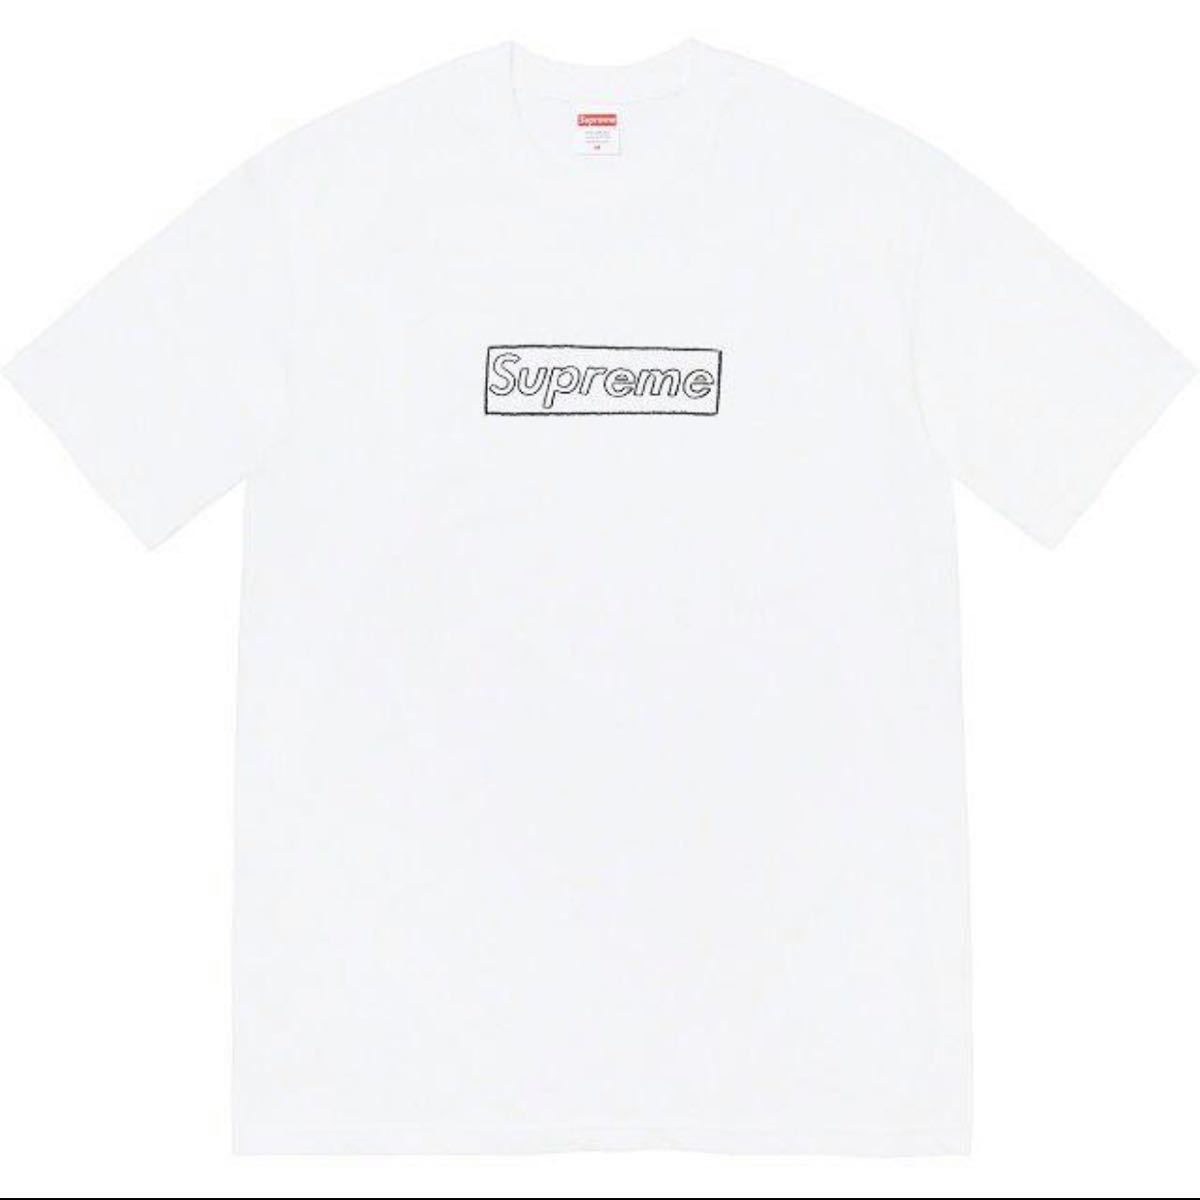 Supreme Lサイズ model tee ホワイト シュプリーム Tシャツ - rehda.com